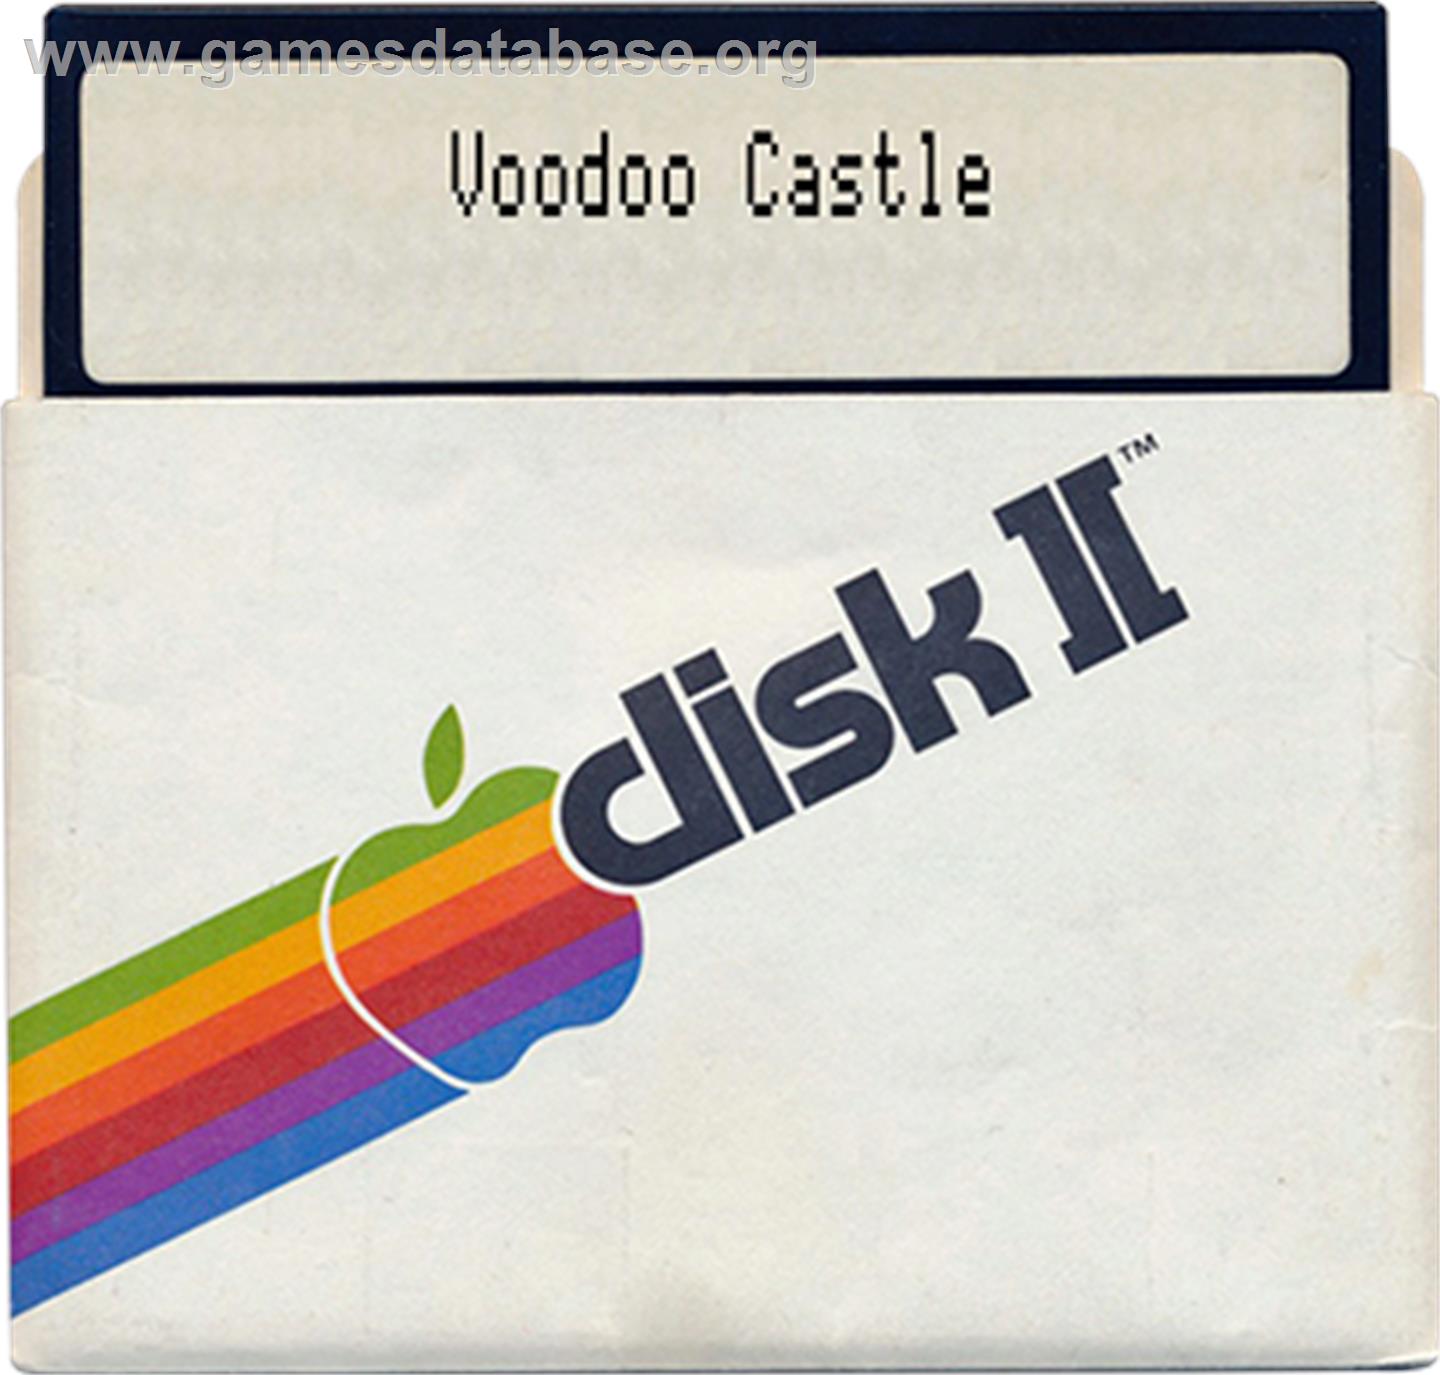 Voodoo Island - Apple II - Artwork - Disc